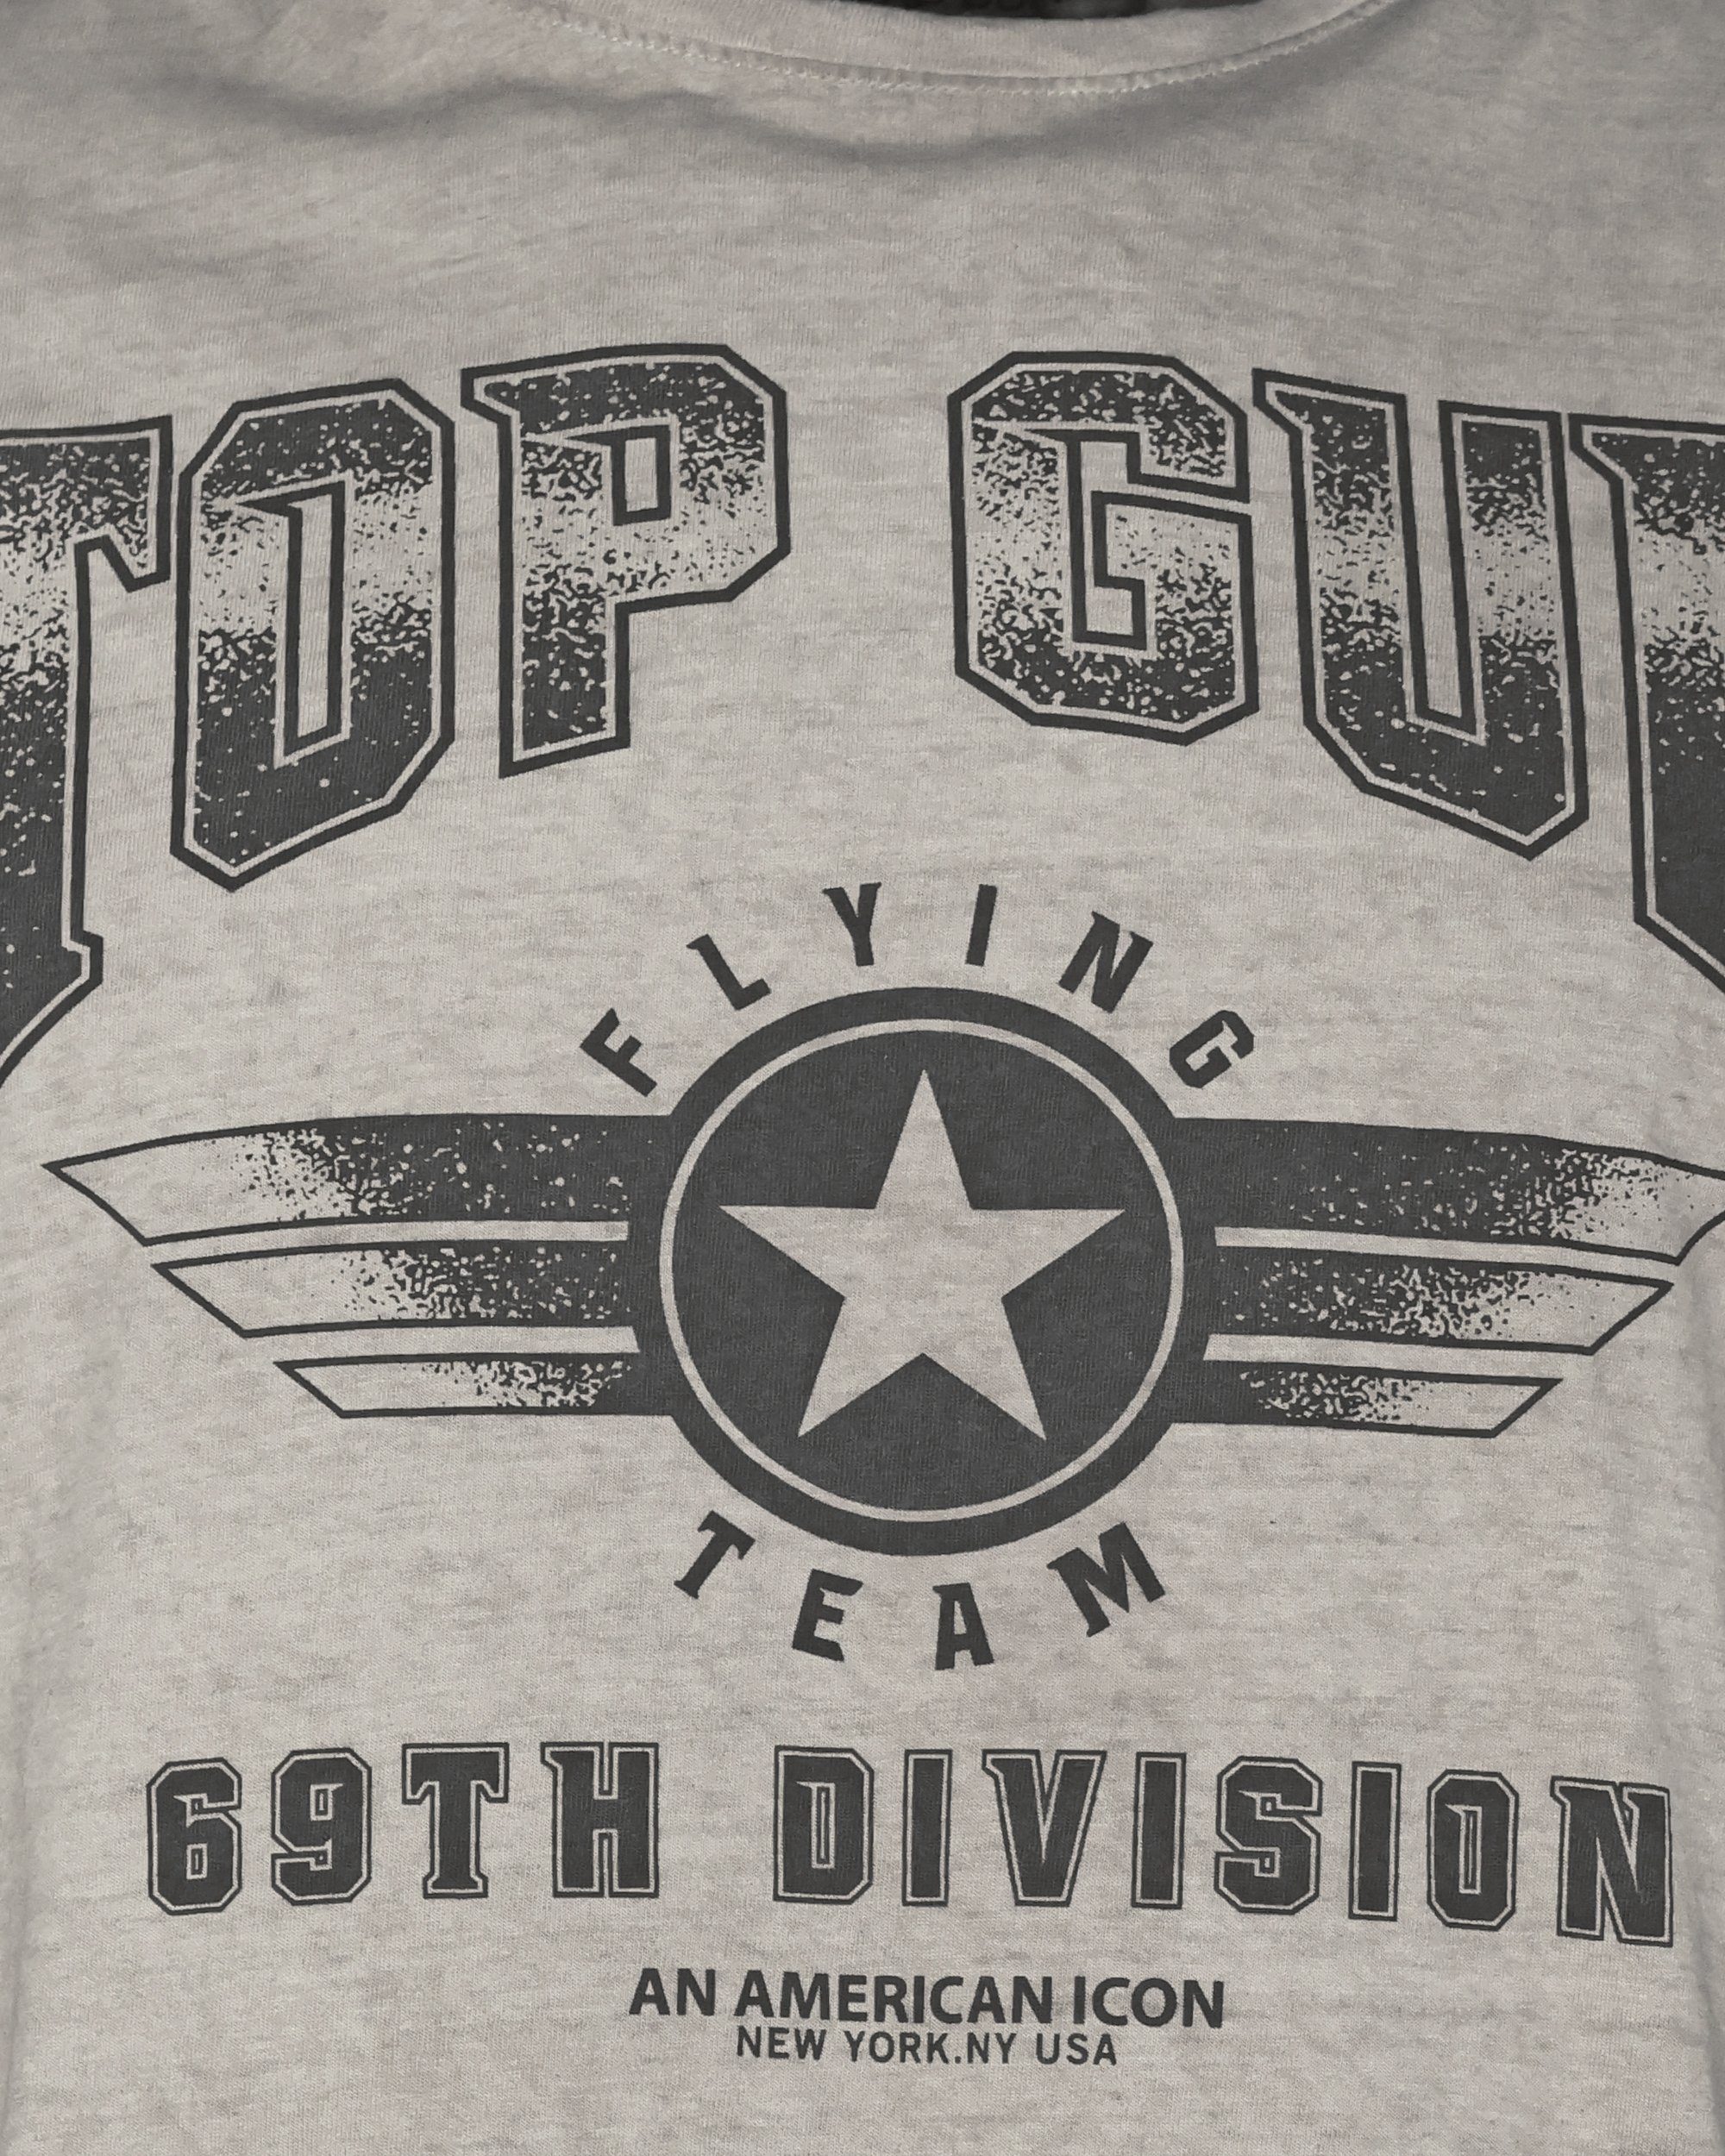 GUN TG20212105 TOP anthrazit T-Shirt